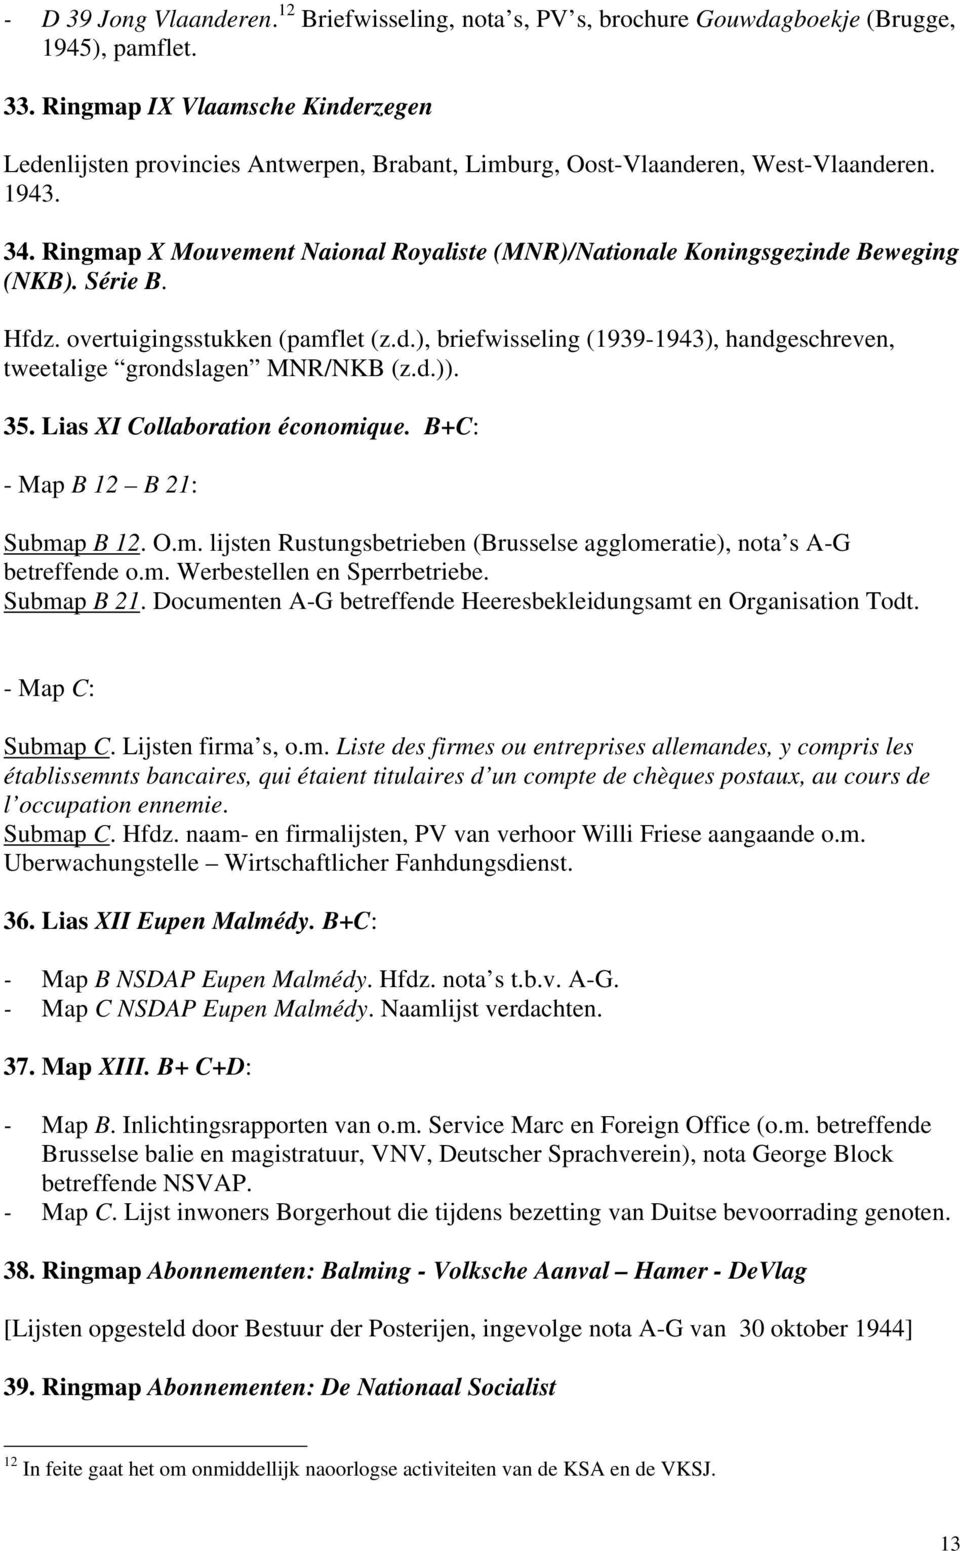 Ringmap X Mouvement Naional Royaliste (MNR)/Nationale Koningsgezinde Beweging (NKB). Série B. Hfdz. overtuigingsstukken (pamflet (z.d.), briefwisseling (1939-1943), handgeschreven, tweetalige grondslagen MNR/NKB (z.